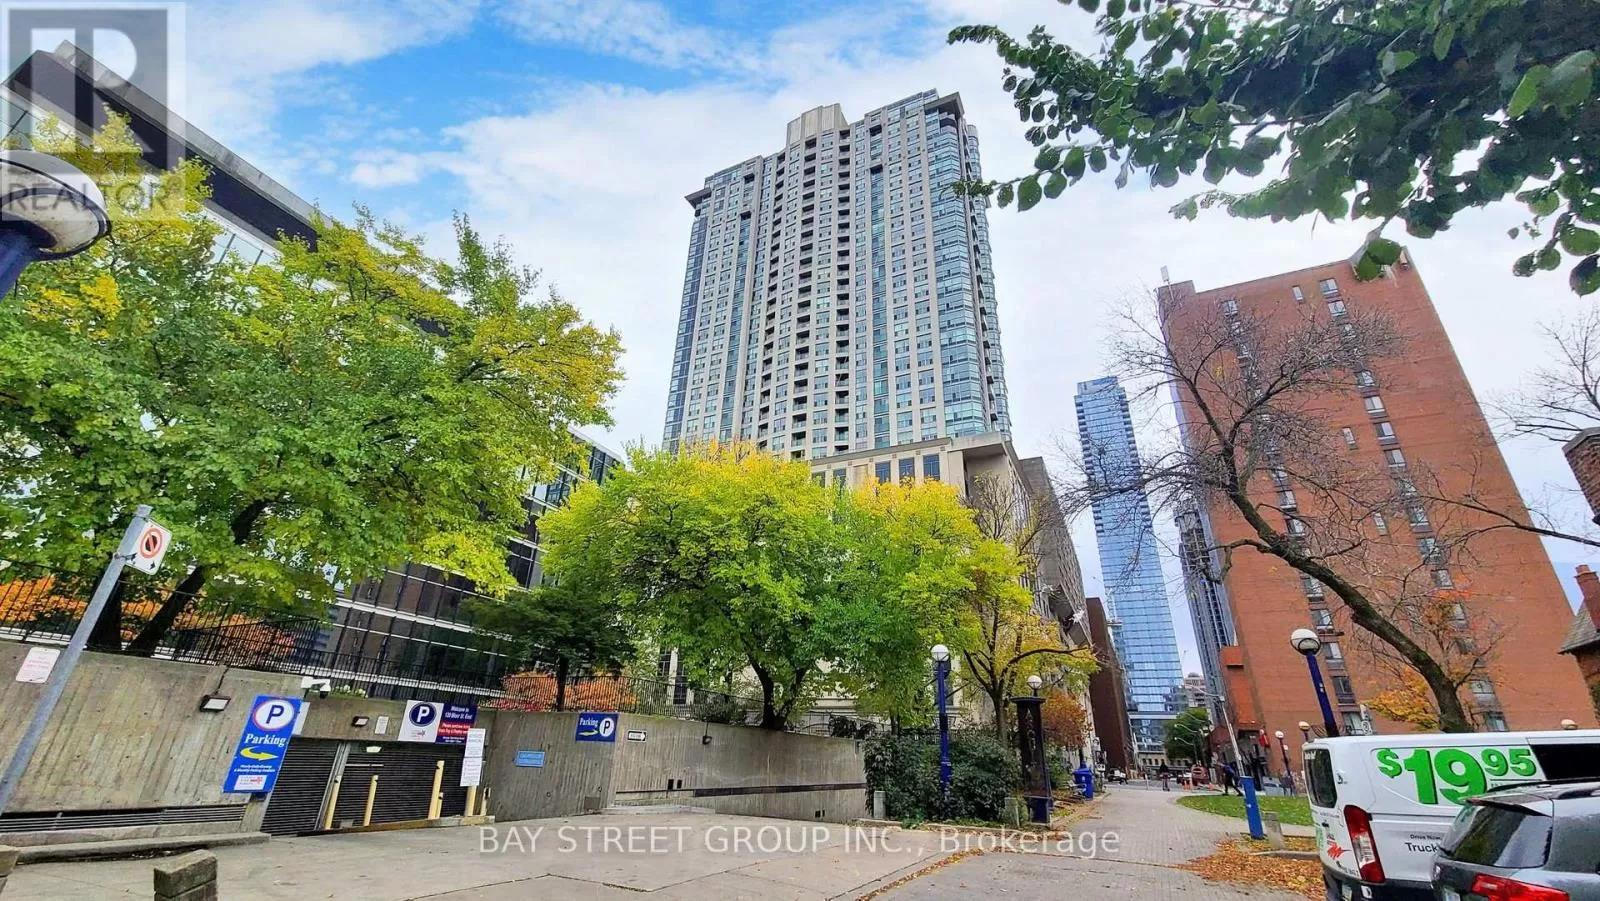 Apartment for rent: 2016 - 8 Park Road, Toronto, Ontario M4W 3S5